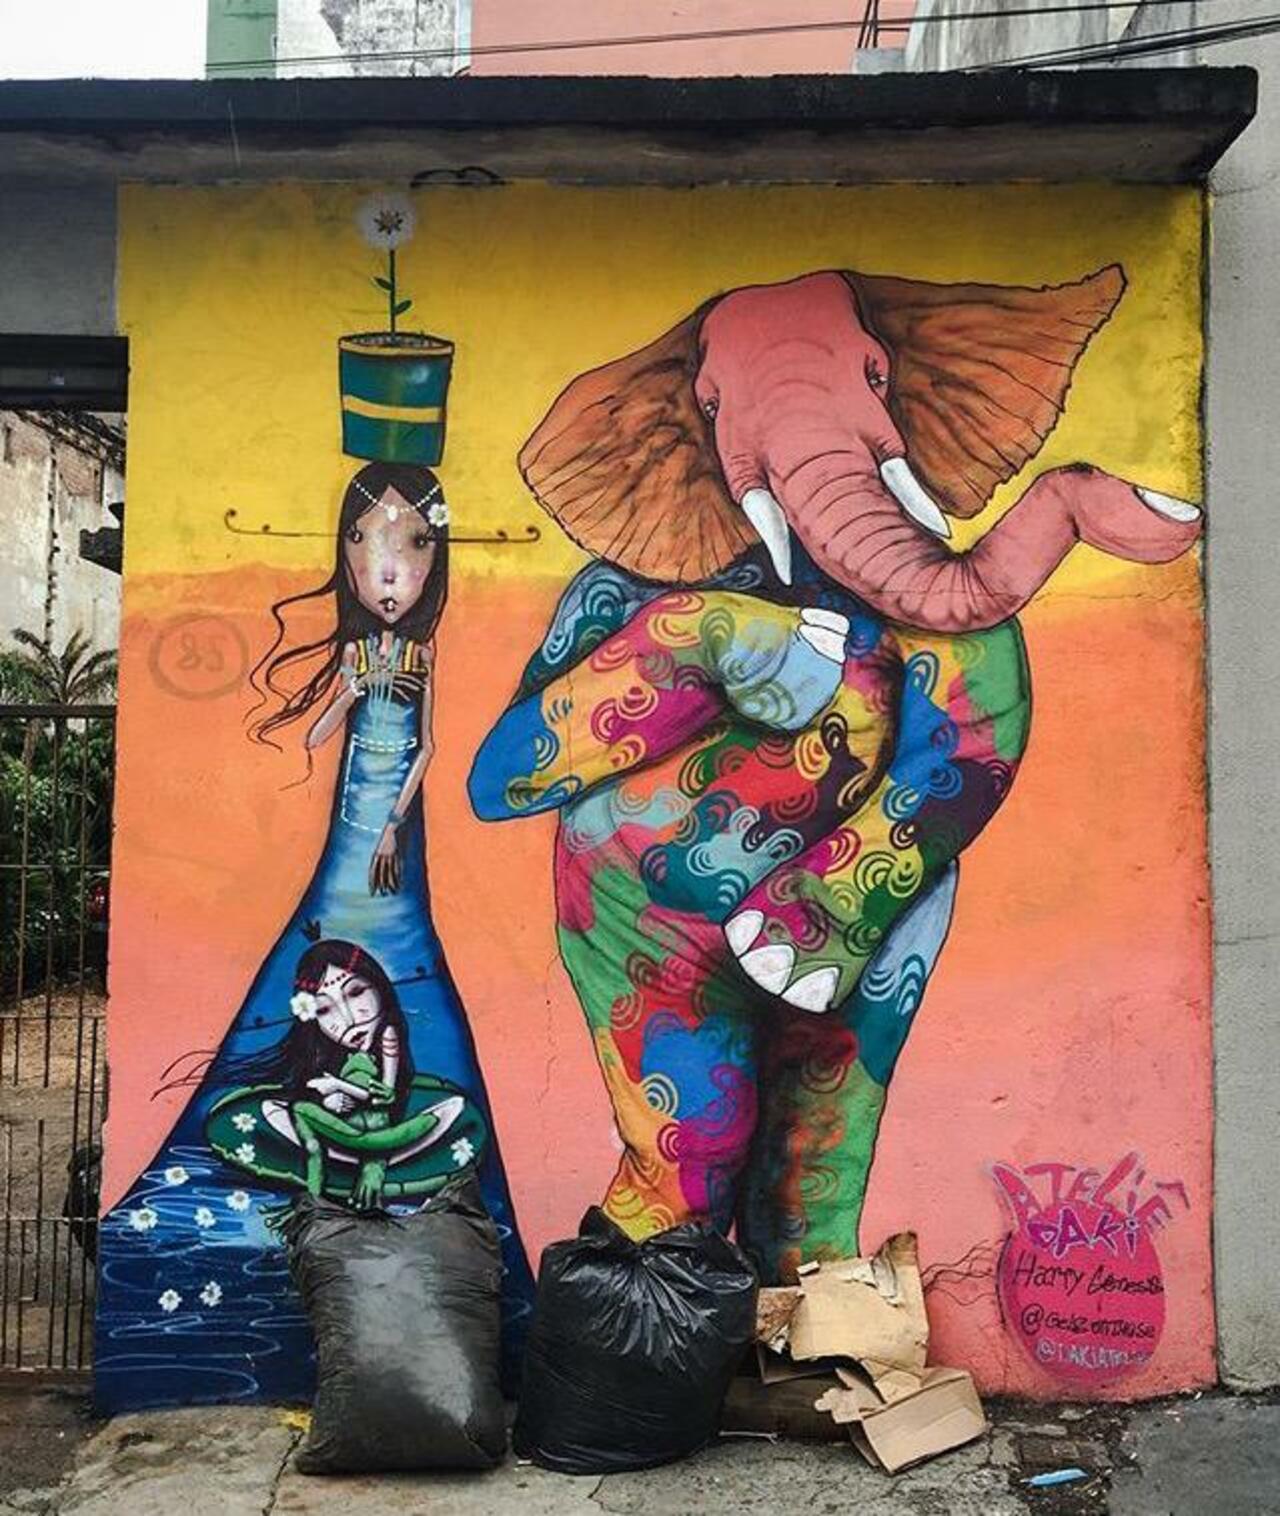 Street Art by Harry Geneis & Gelson in São Paulo #art #mural #graffiti #streetart http://t.co/SlLbhuMZfD … … …… … http://twitter.com/GoogleStreetArt/status/648016473831645184/photo/1/large?utm_source=fb&utm_medium=fb&utm_campaign=charlesjackso14&utm_content=648021498851139584